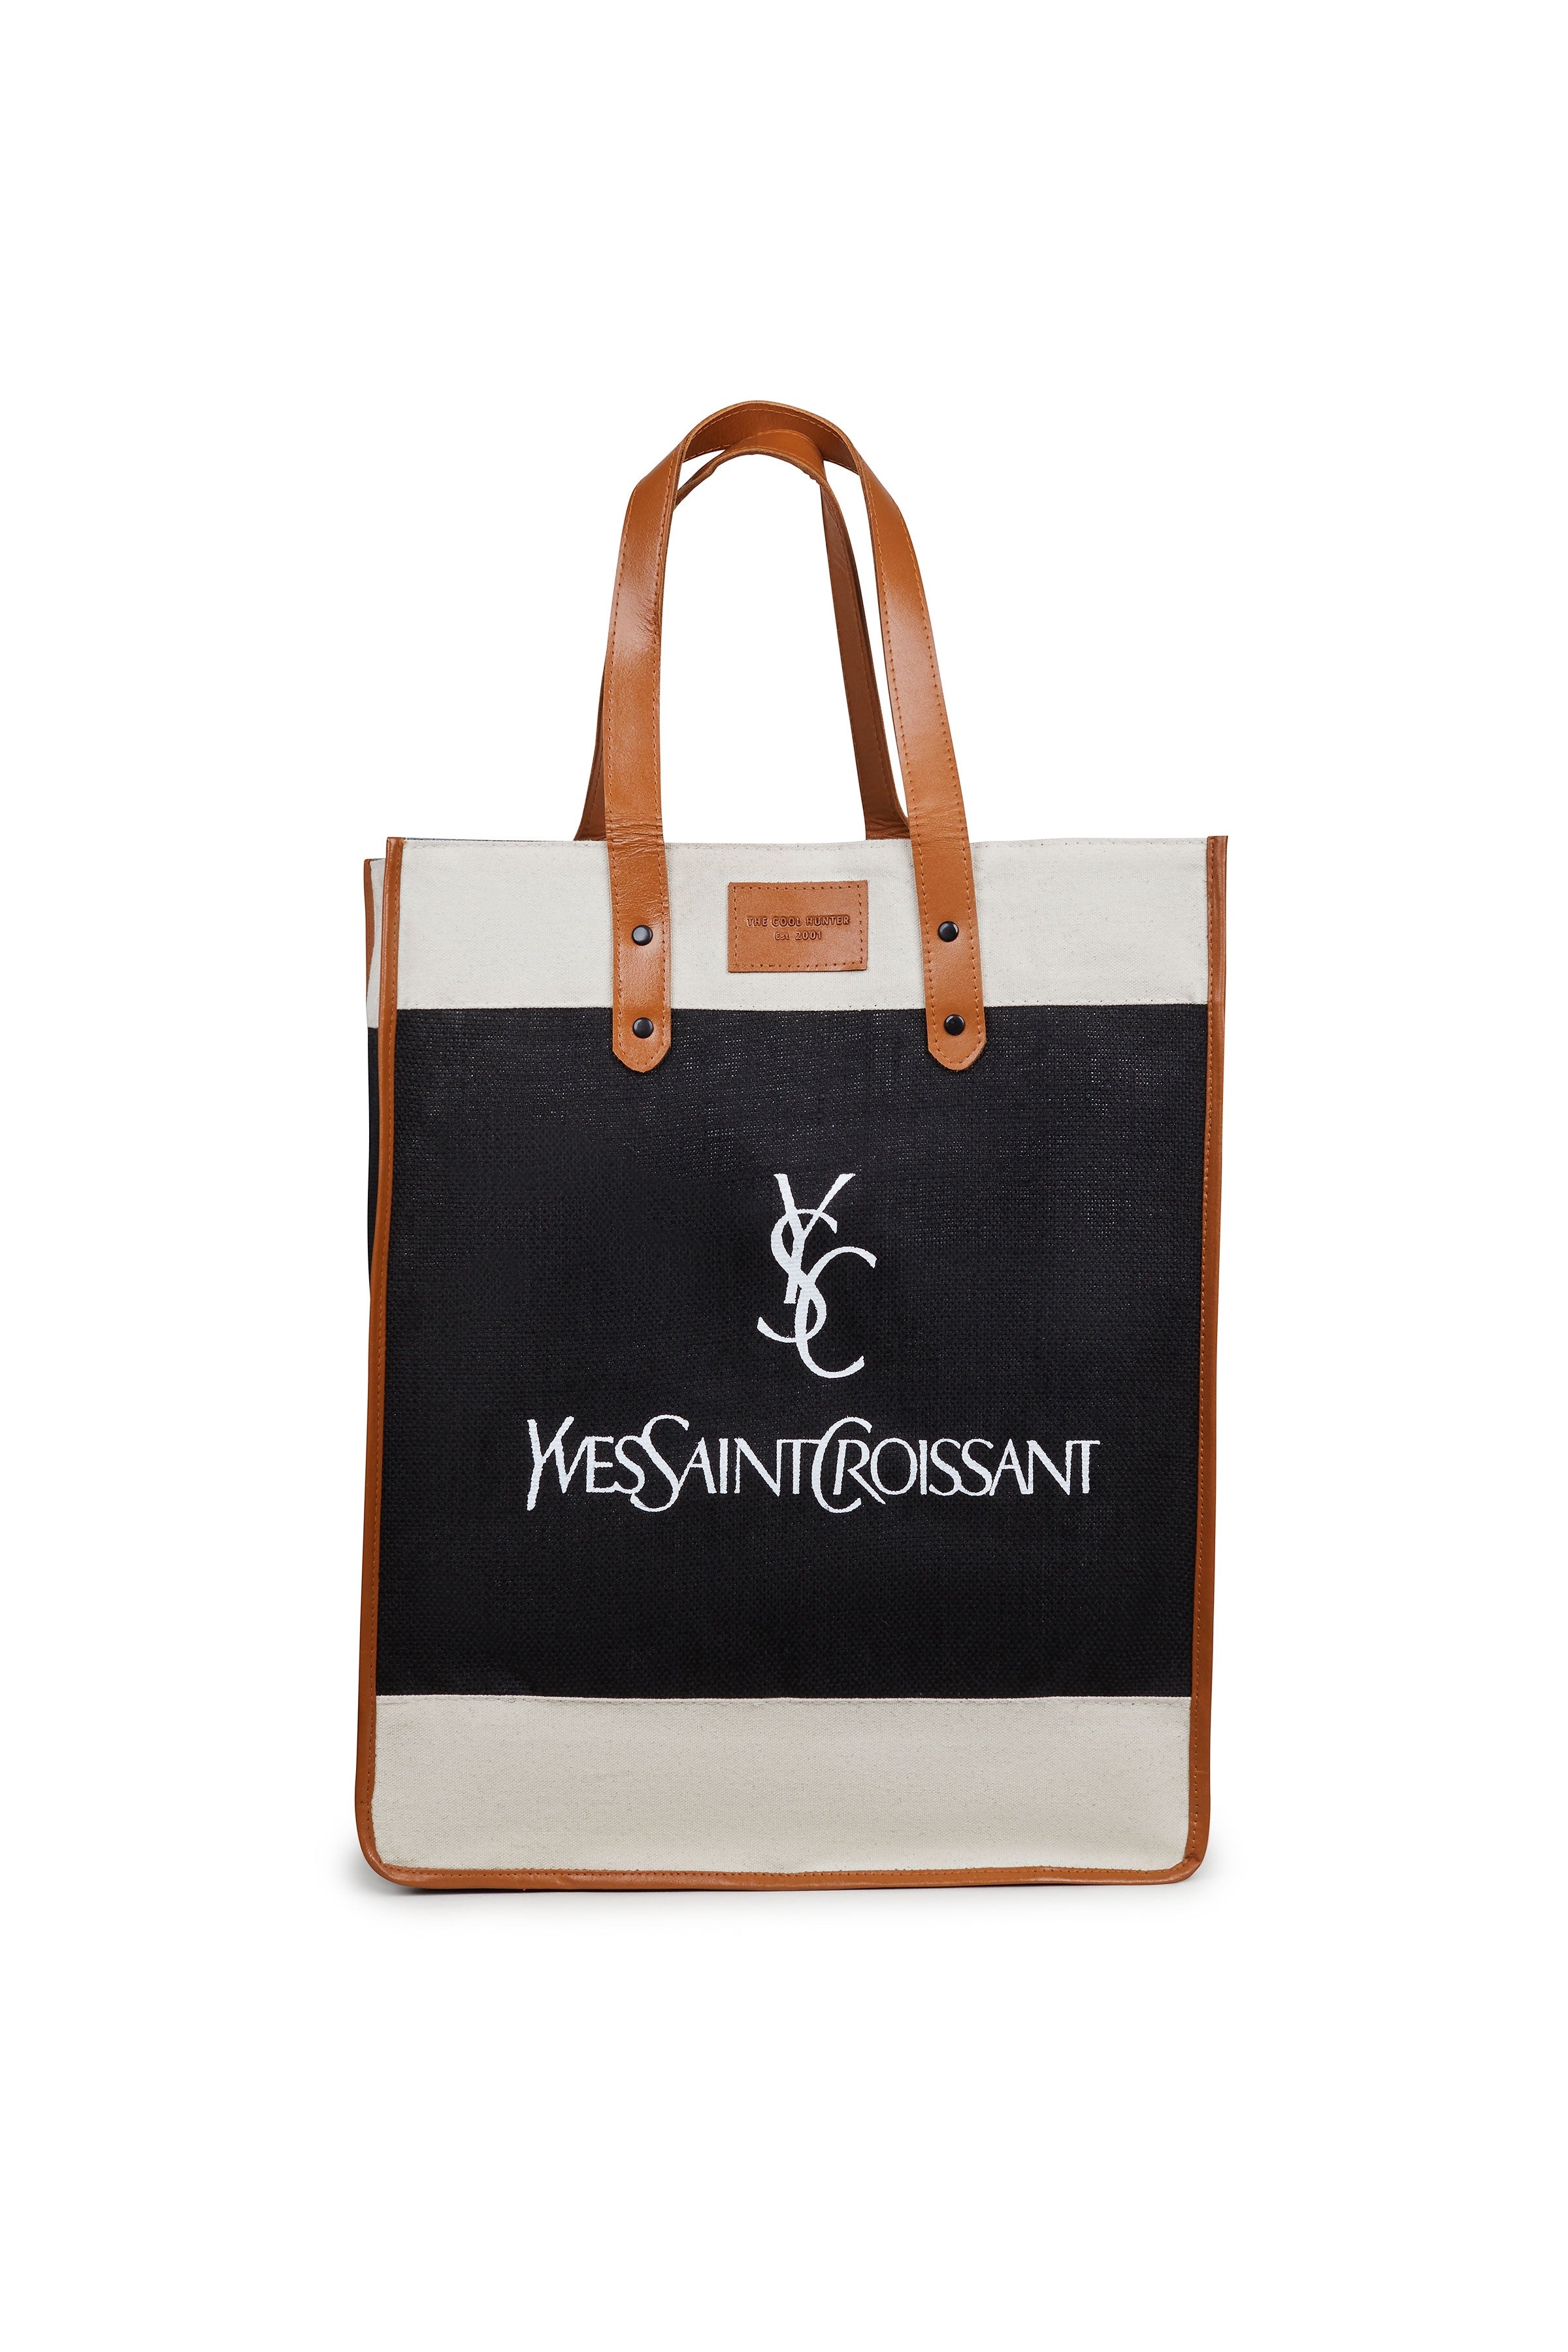 The Cool Hunter Market Bag Tan Leather - Yves Saint Croissant - NEW